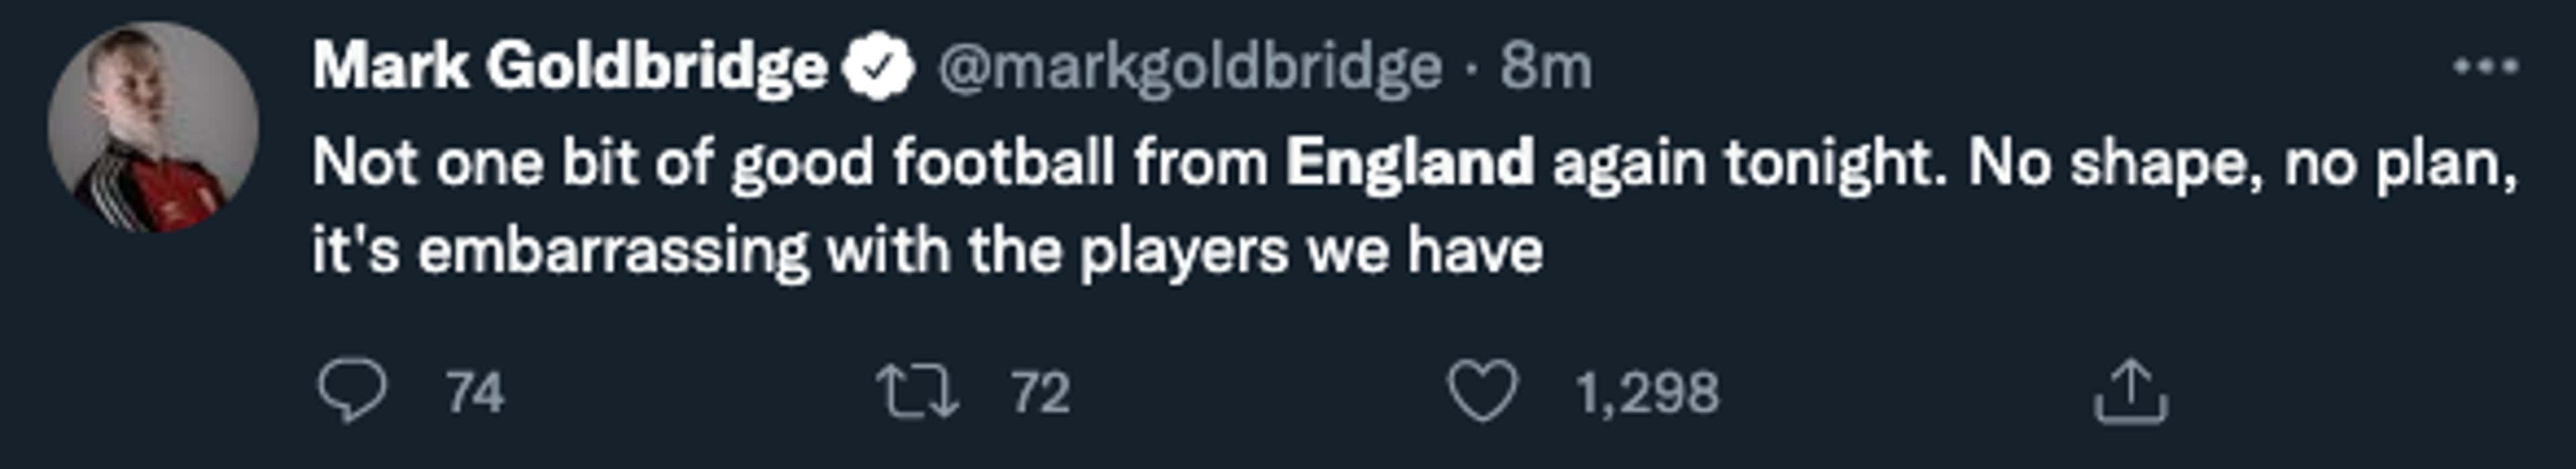 England tweet 2 Goldbridge